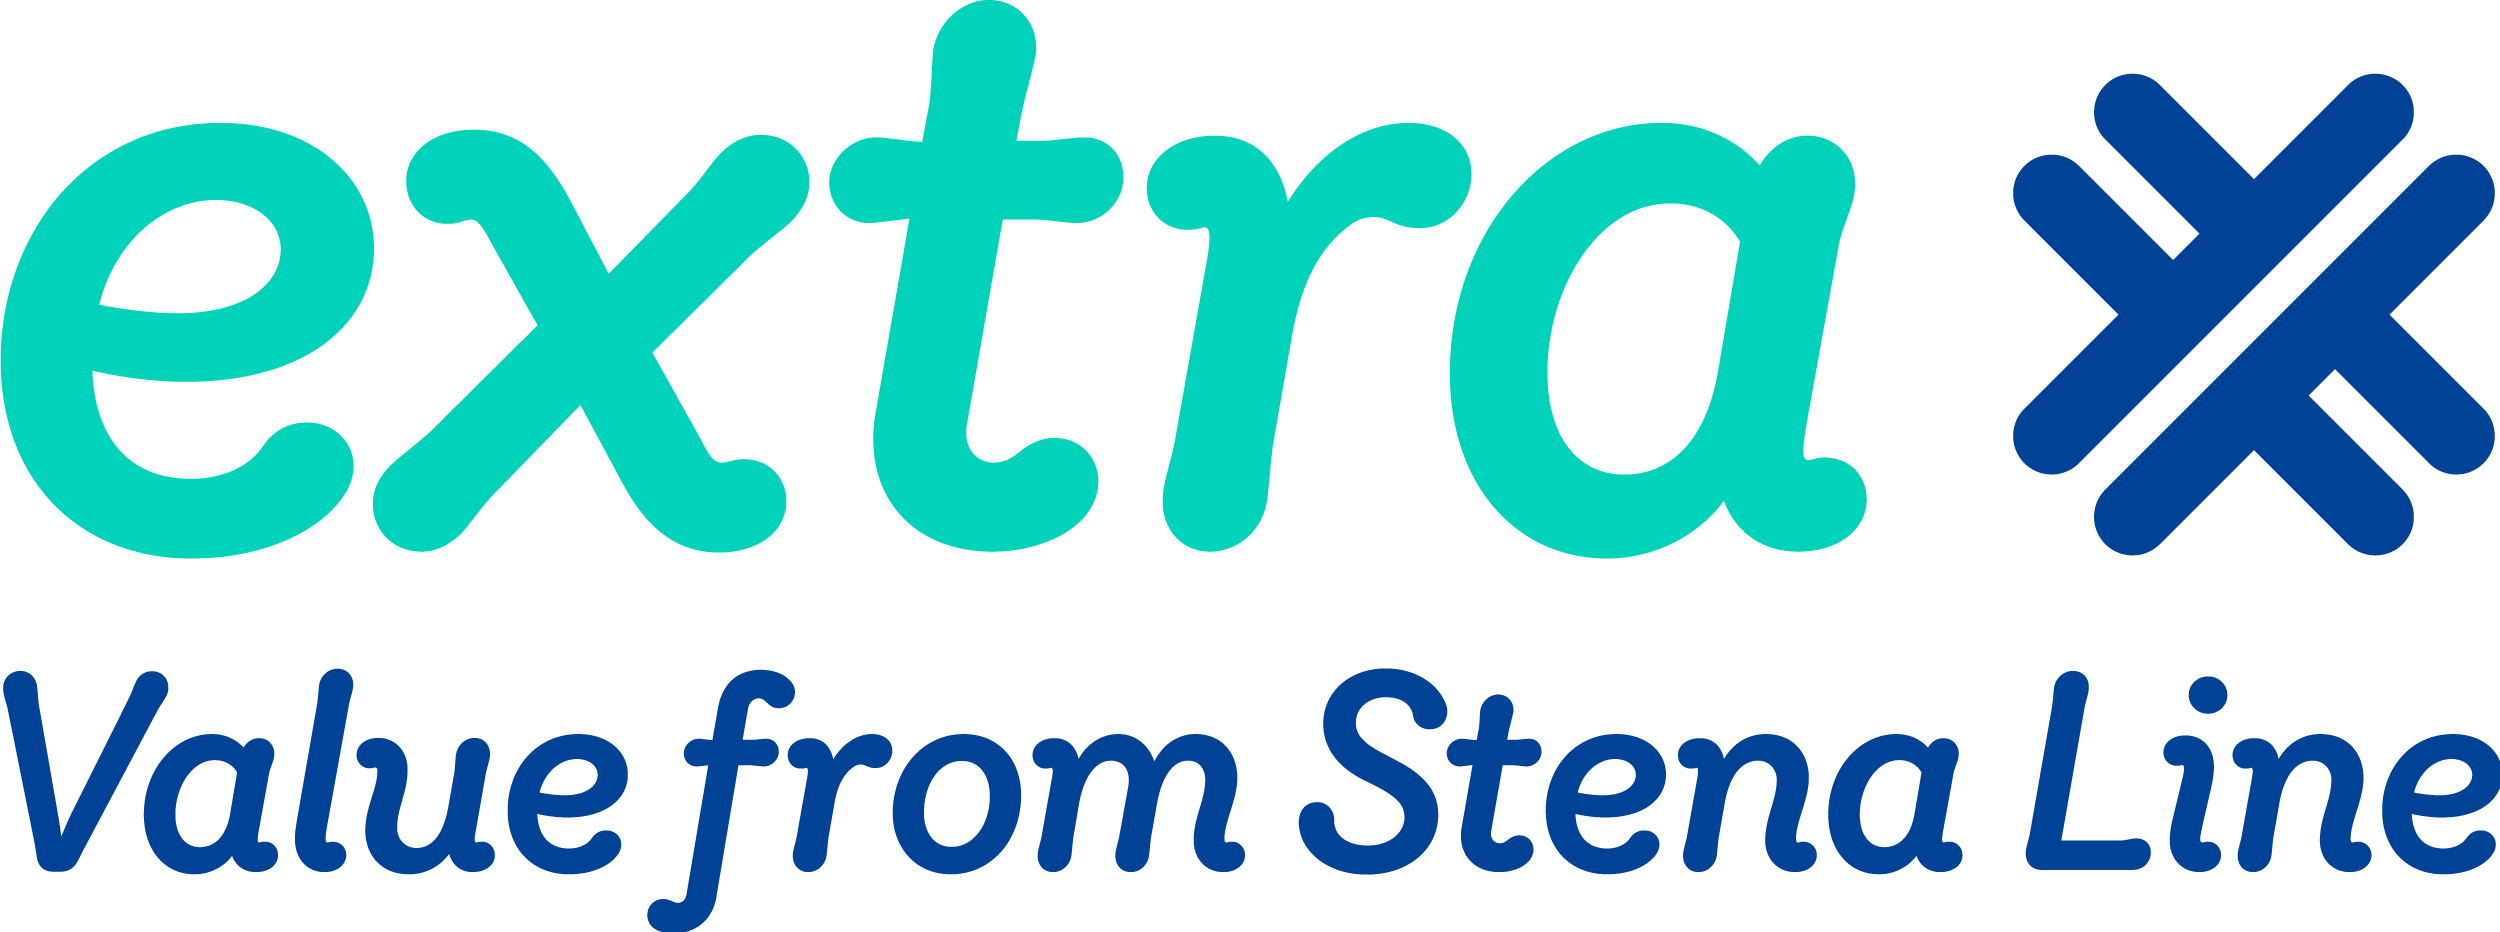 Logo til Stena Lines medlemsklub kaldet “Extra”.